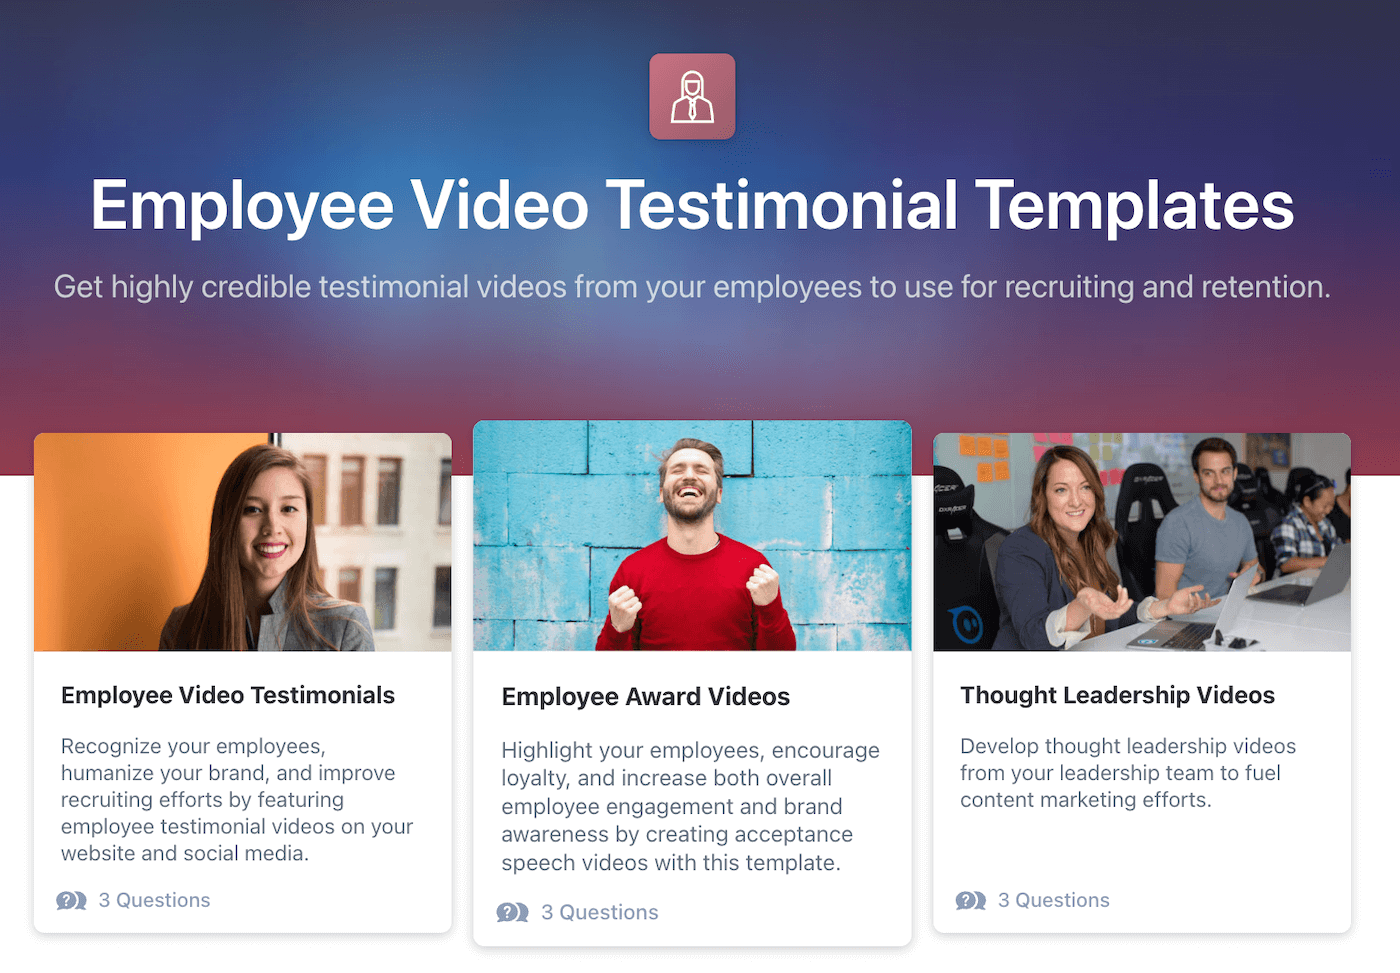 Employee Video Testimonial Templates